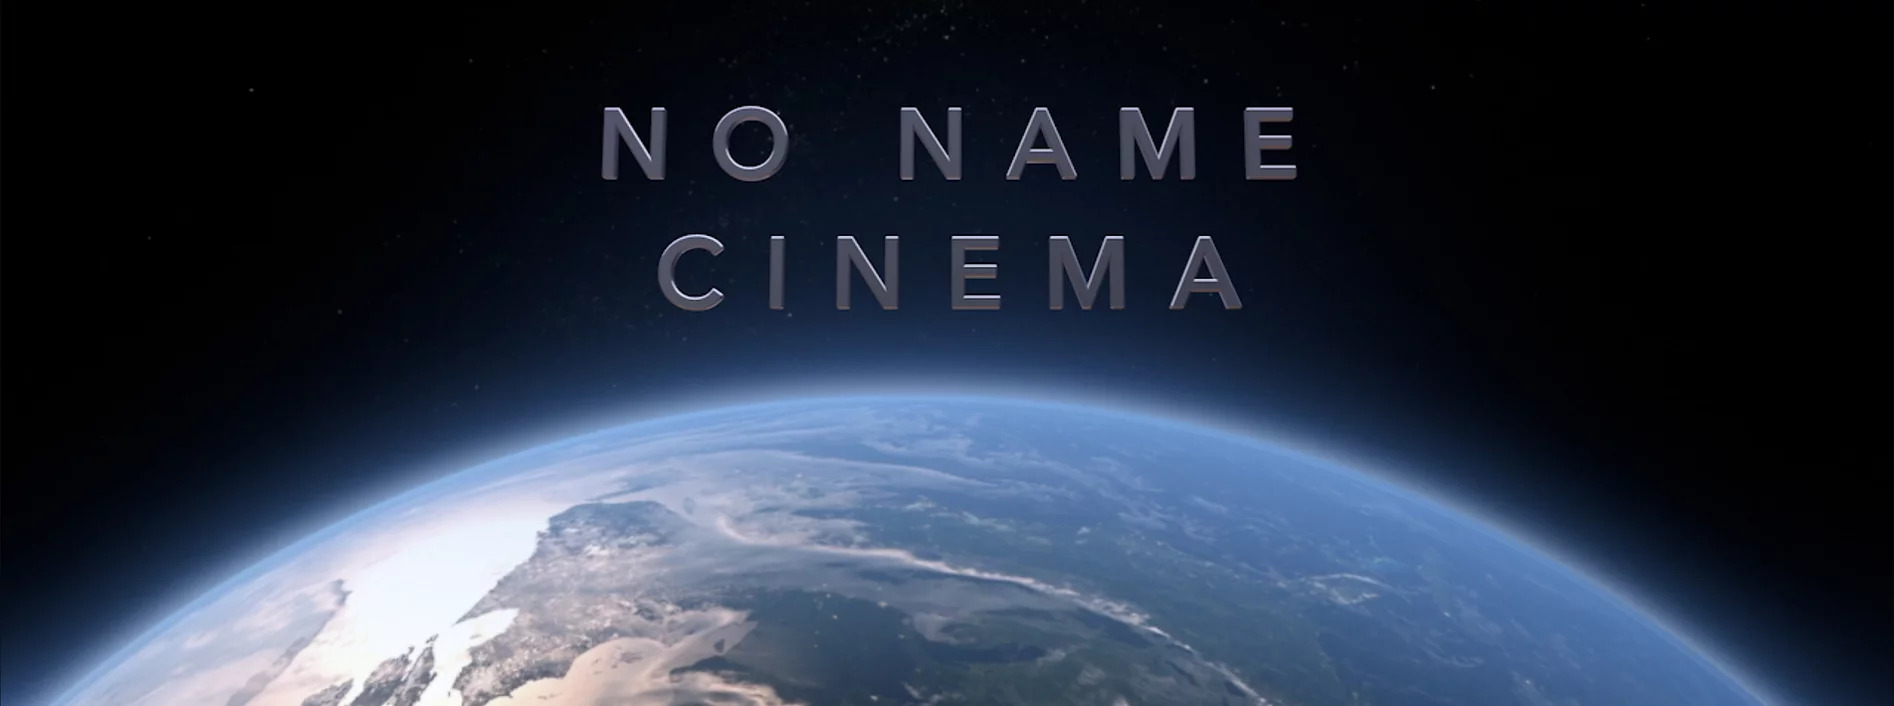 no name cinema logo